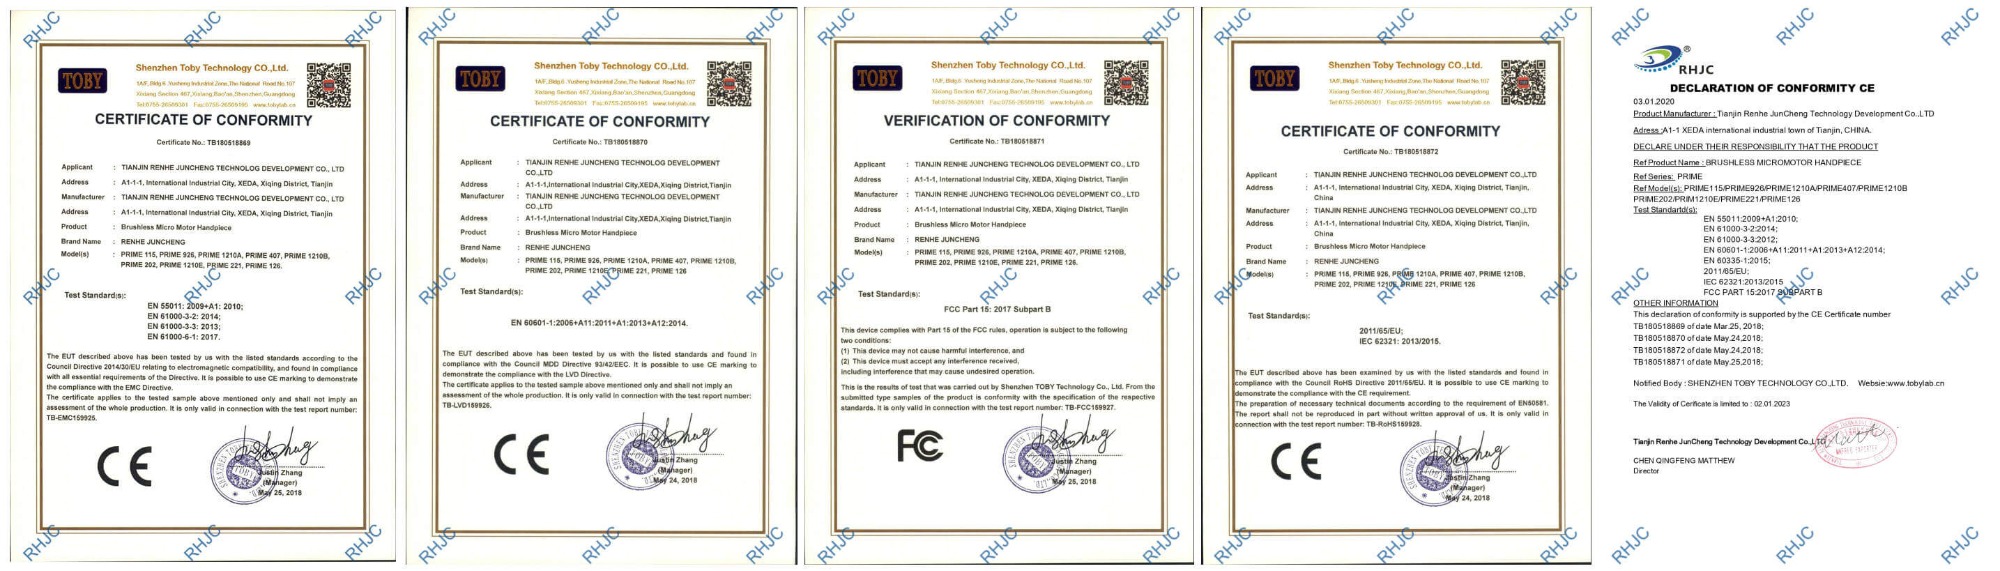 CE, ROSH, and FCC certificates